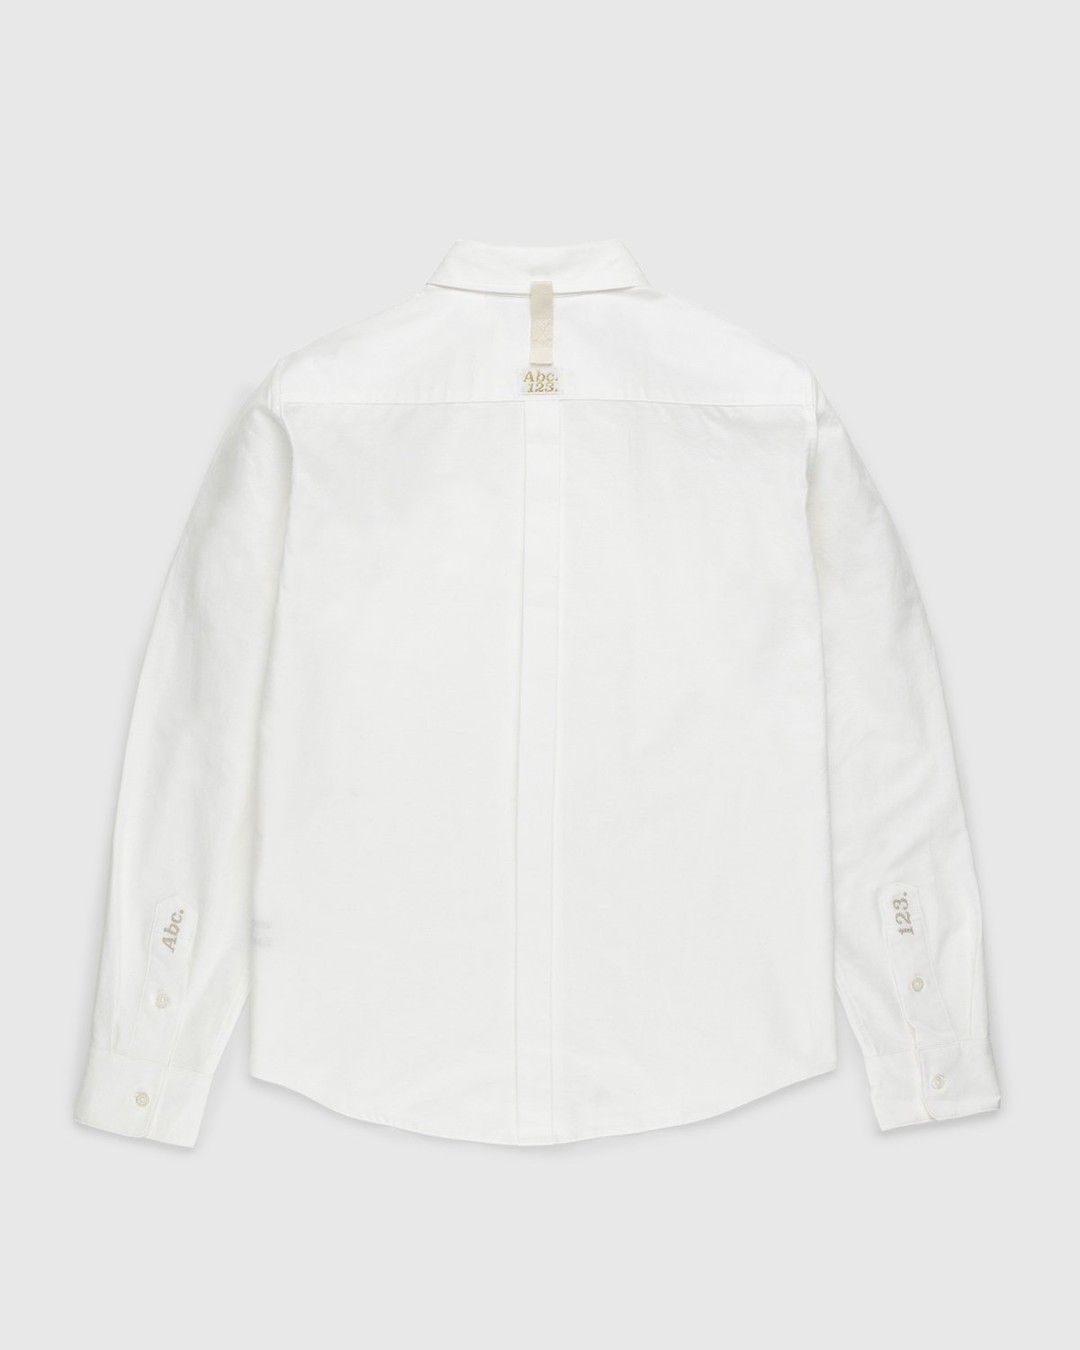 Abc. – Oxford Woven Shirt Selenite - Longsleeve Shirts - White - Image 2